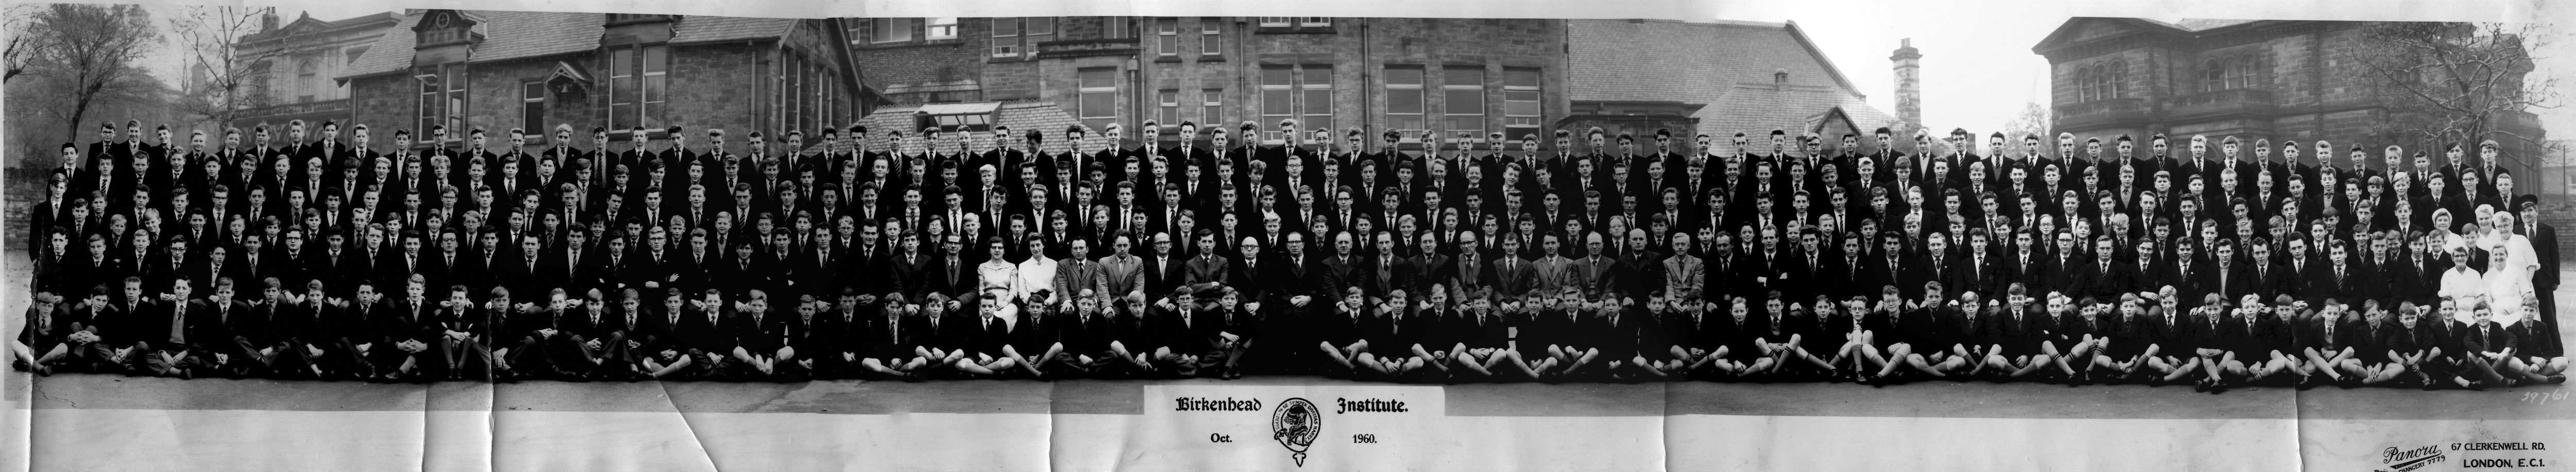 Whole School Photograph 1960